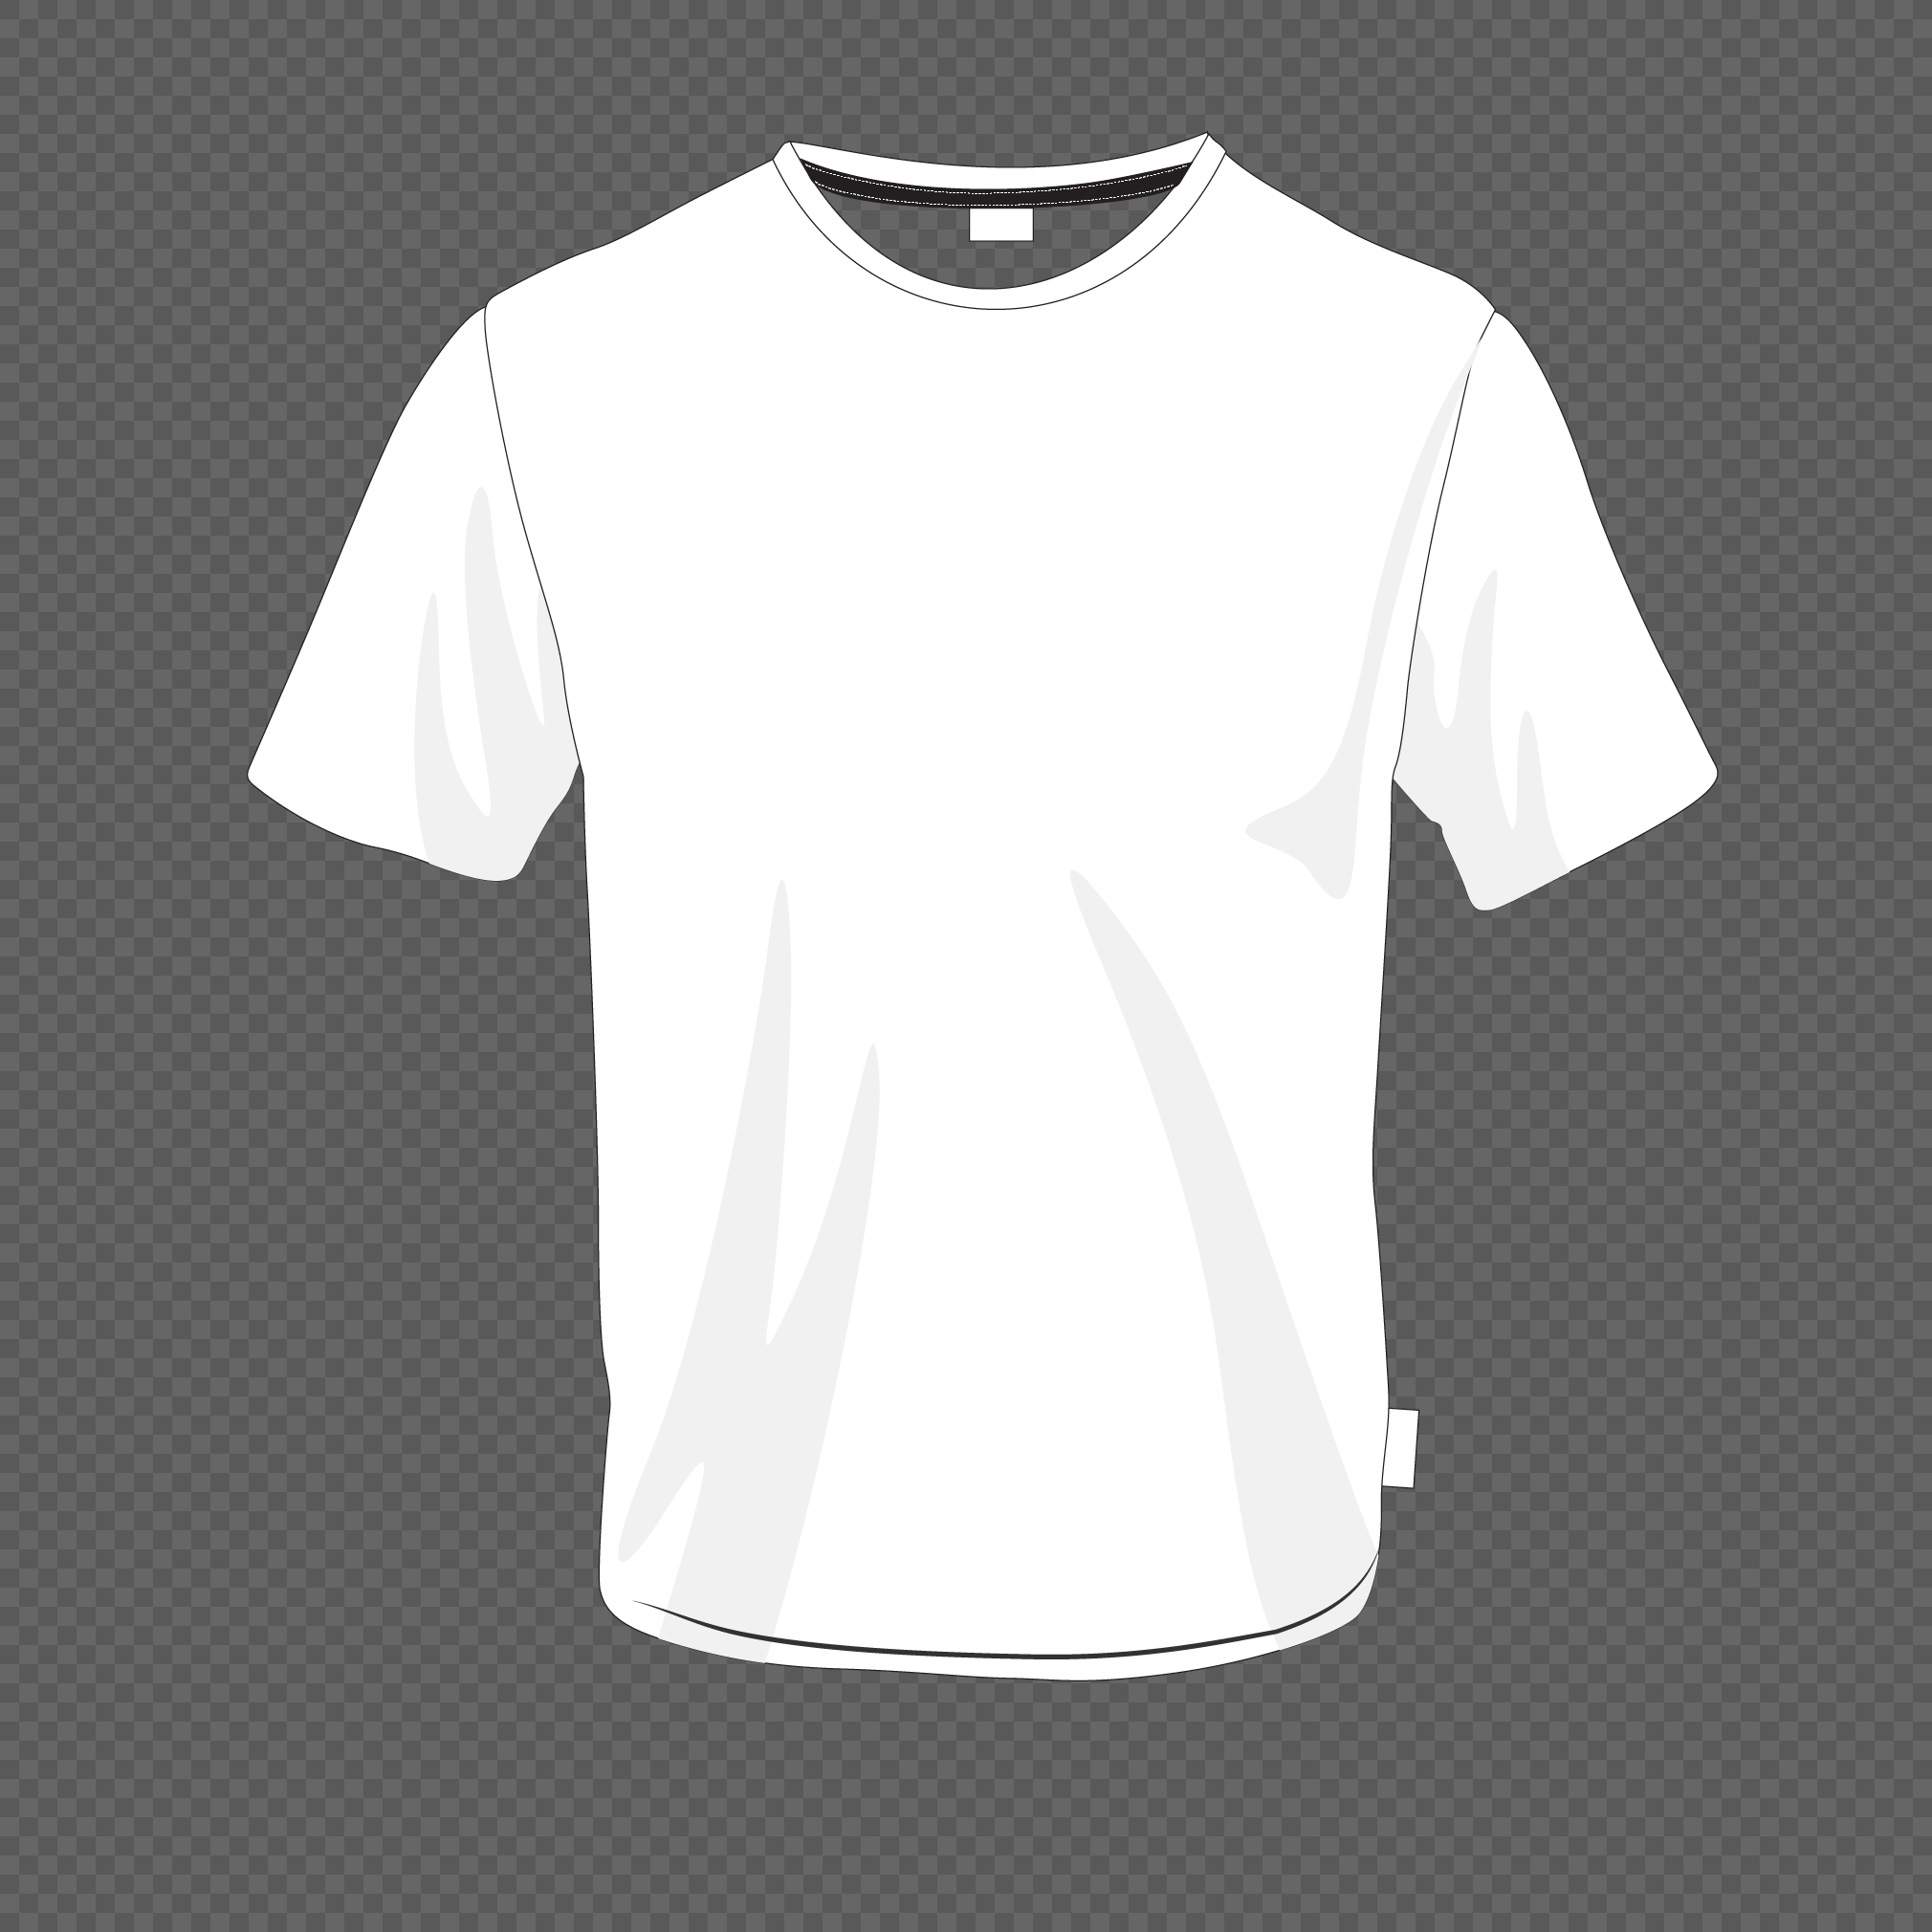 t-shirt-vector-png-at-getdrawings-free-download